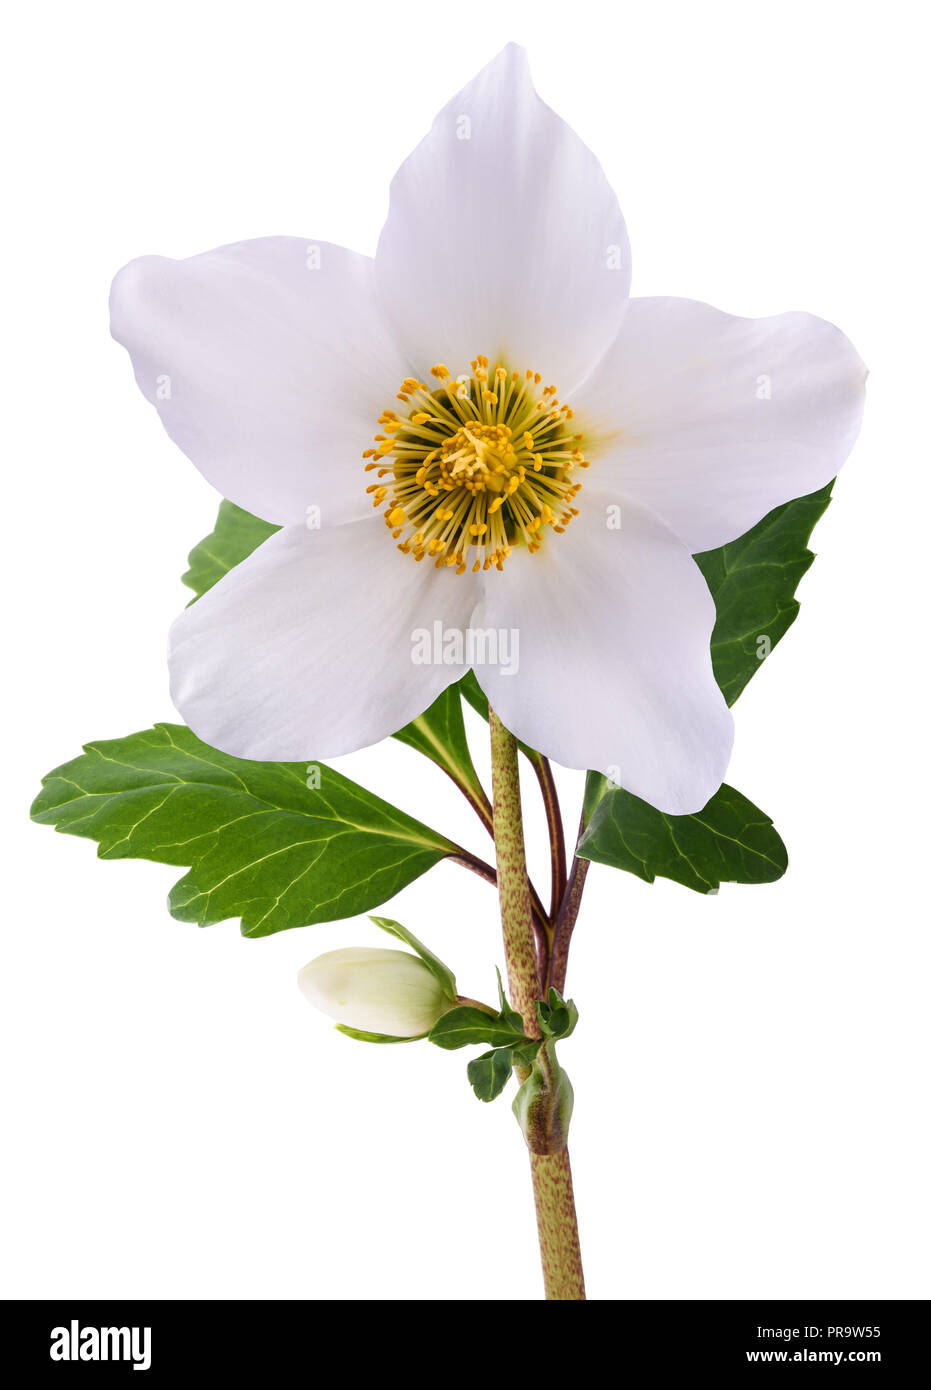 Hellebore flower (Christmas rose) isolated on white Stock Photo